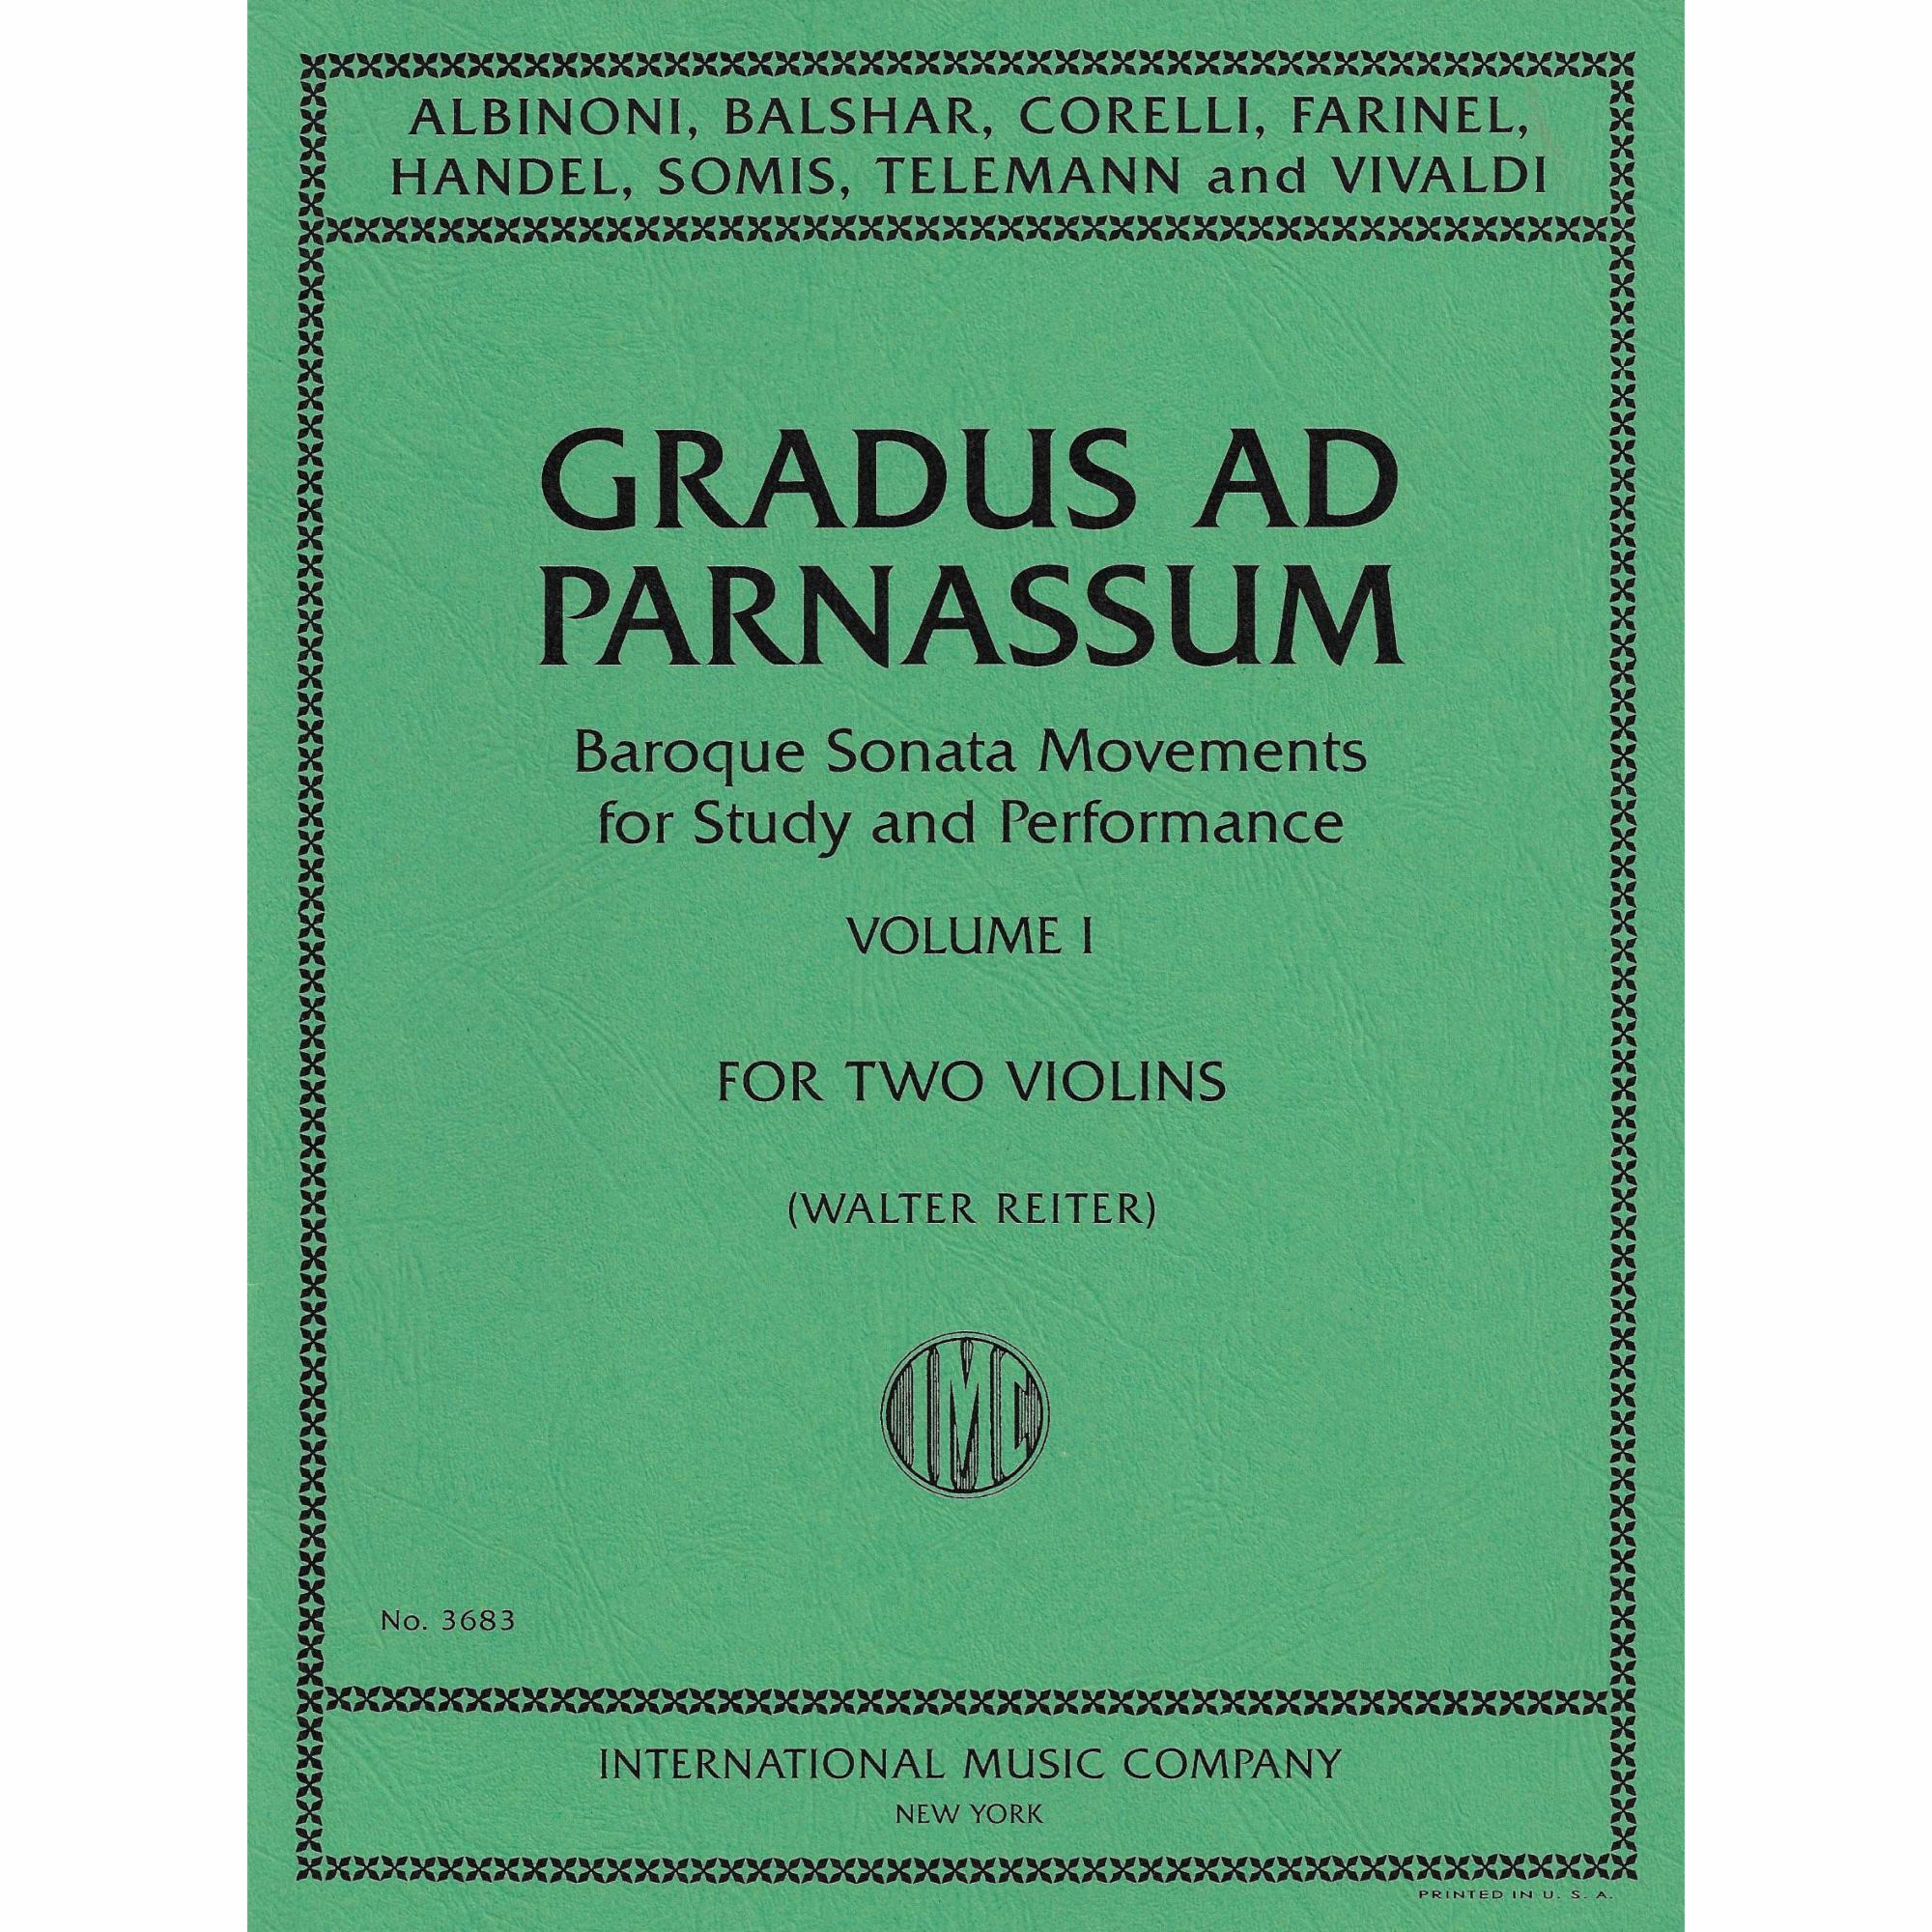 Gradus ad Parnassum, Volume I for Two Violins